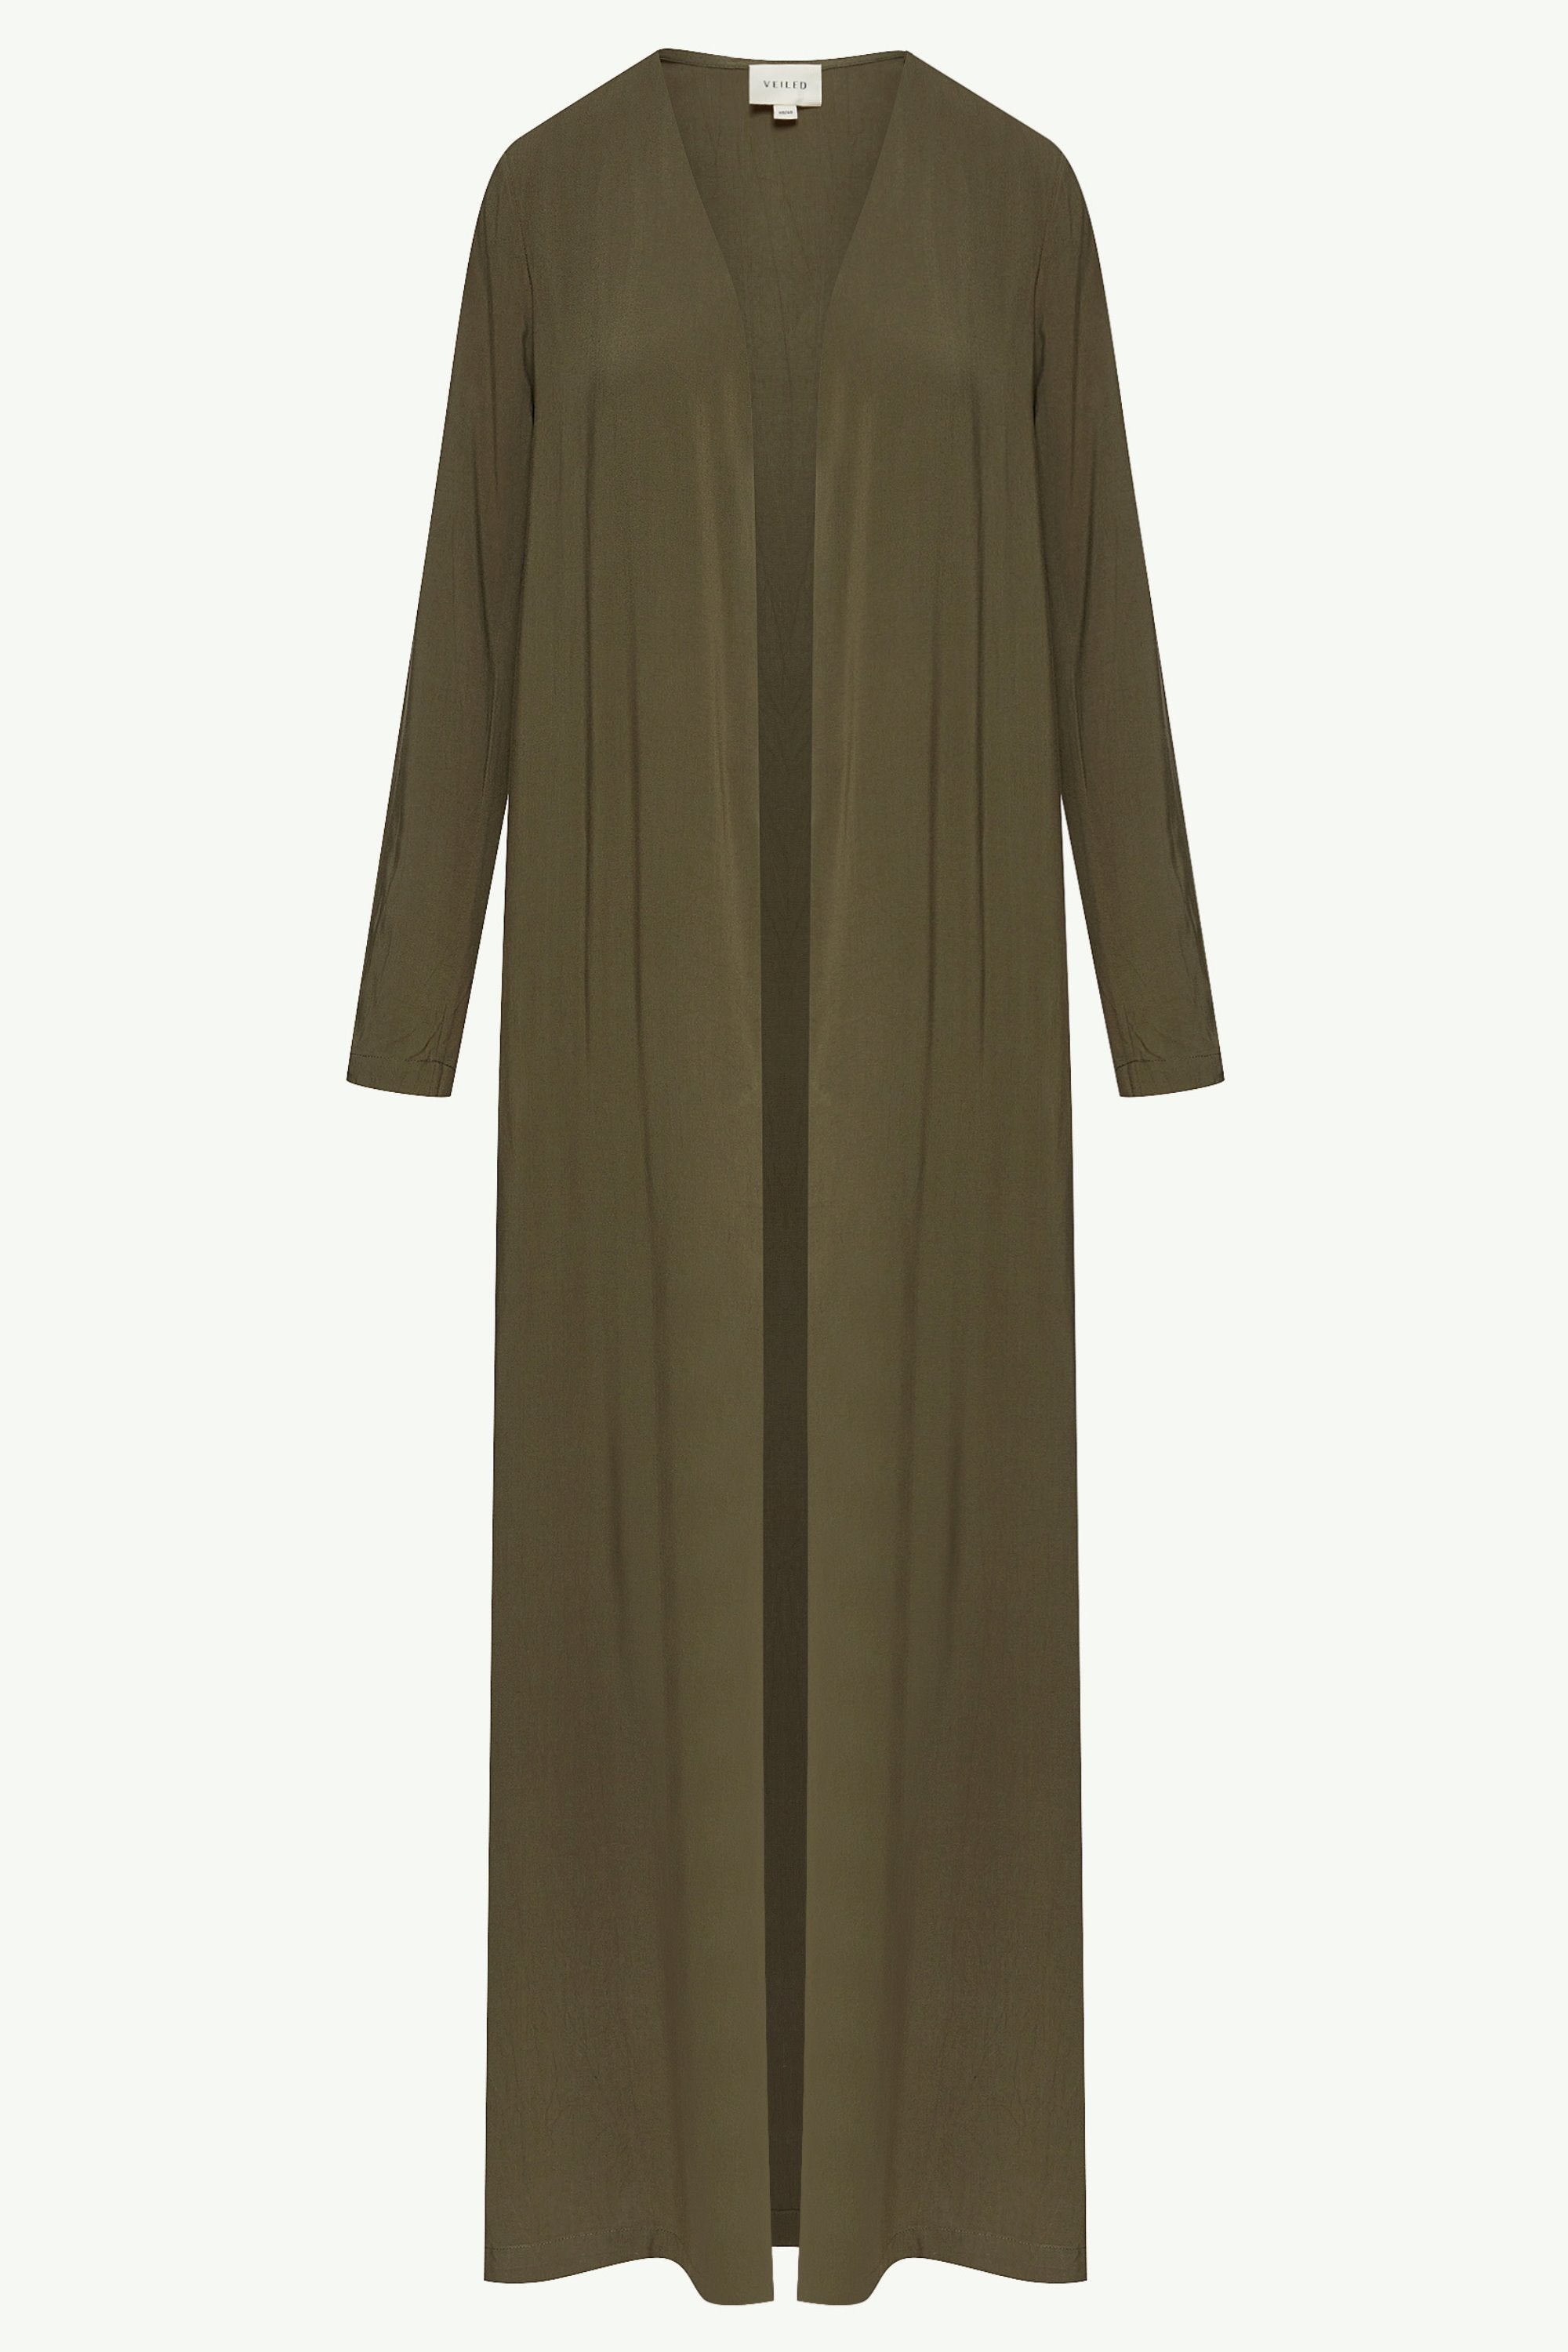 Essential Woven Open Abaya - Olive Clothing saigonodysseyhotel 